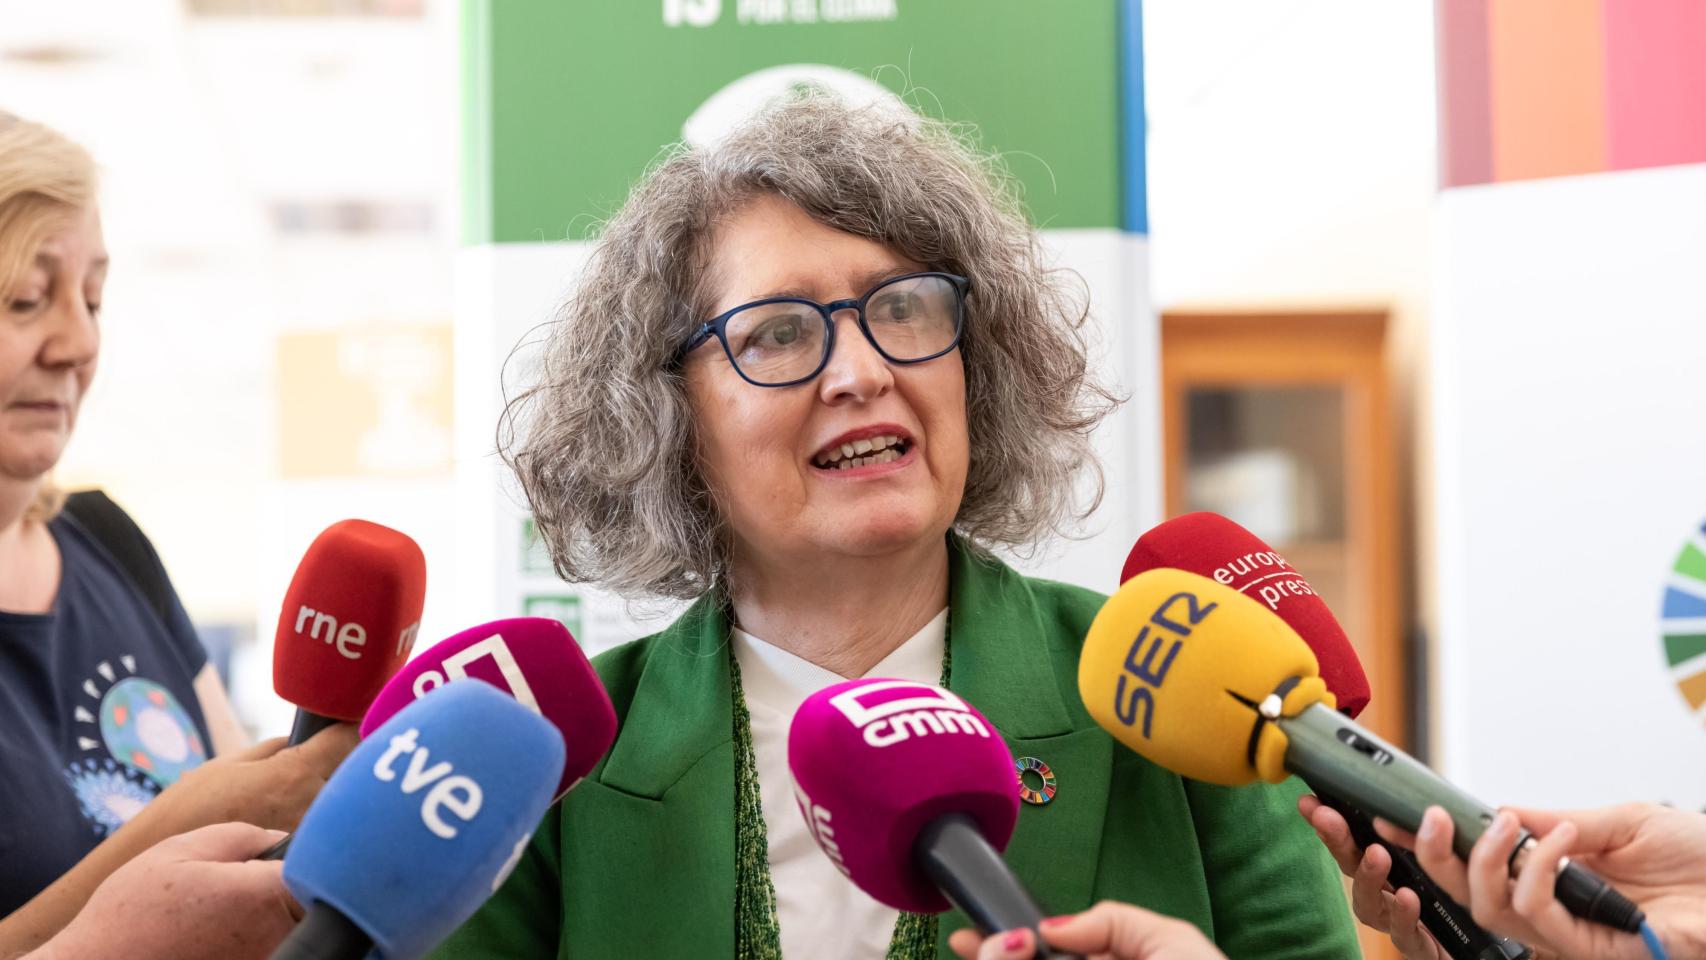 Mercedes Gómez, consejera de Desarrollo Sostenible de Castilla-La Mancha.